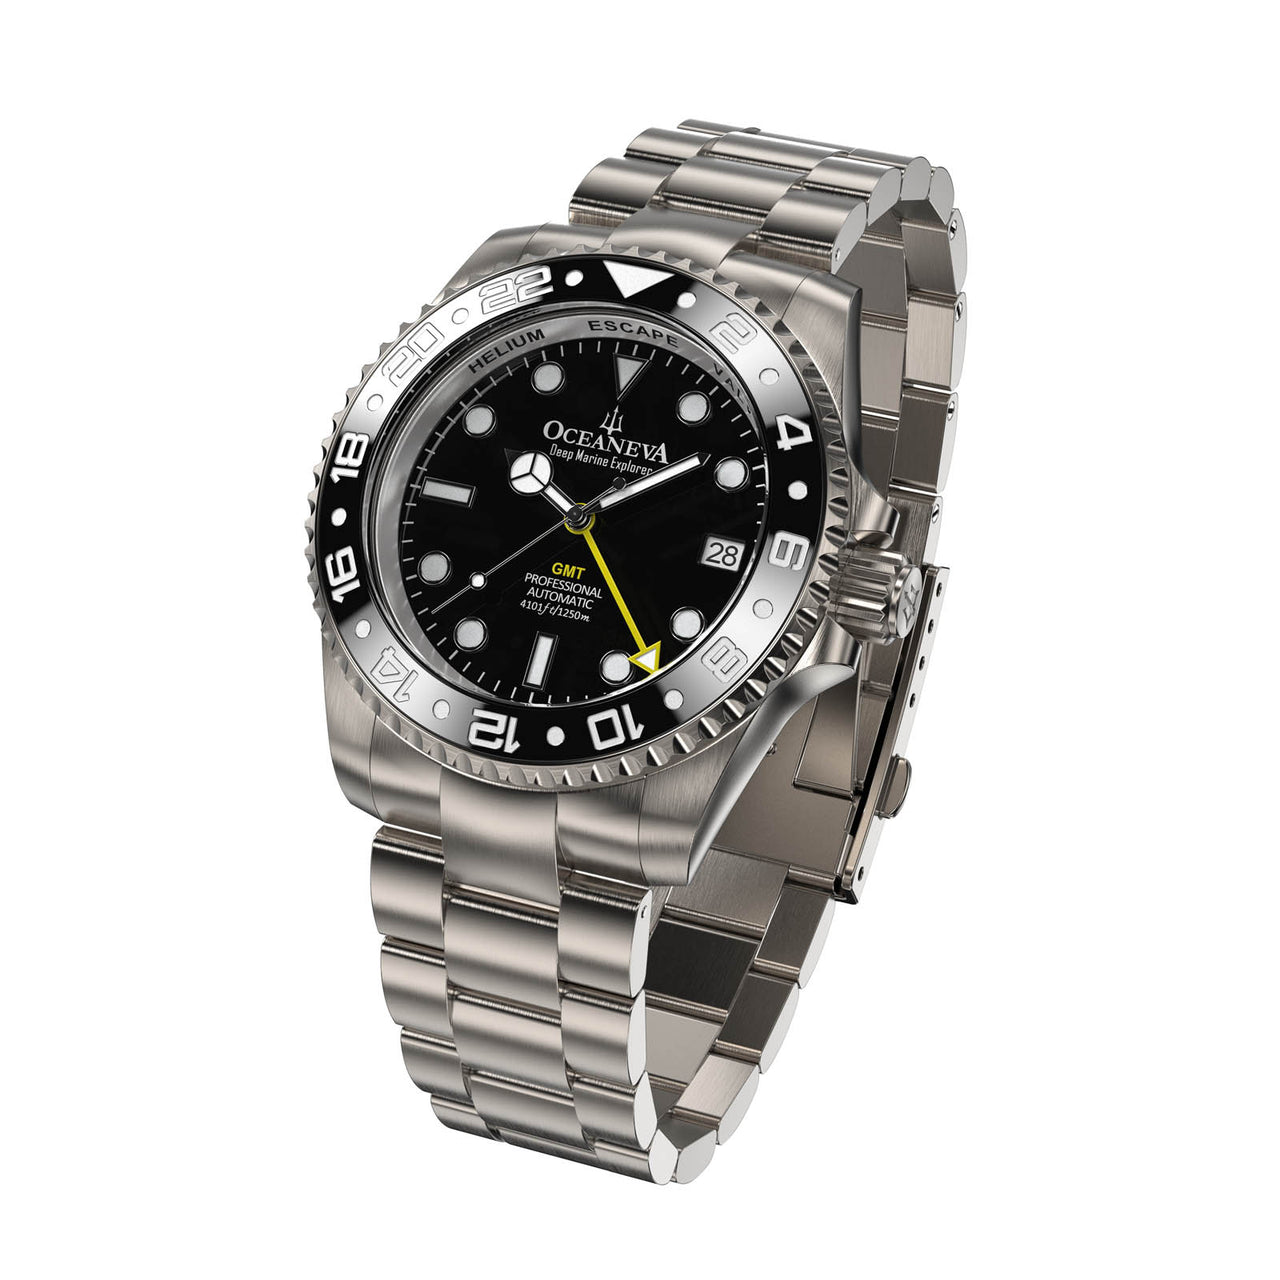 Oceaneva Deep Marine Explorer Watch with 24 jewels and 41-hour power reserve